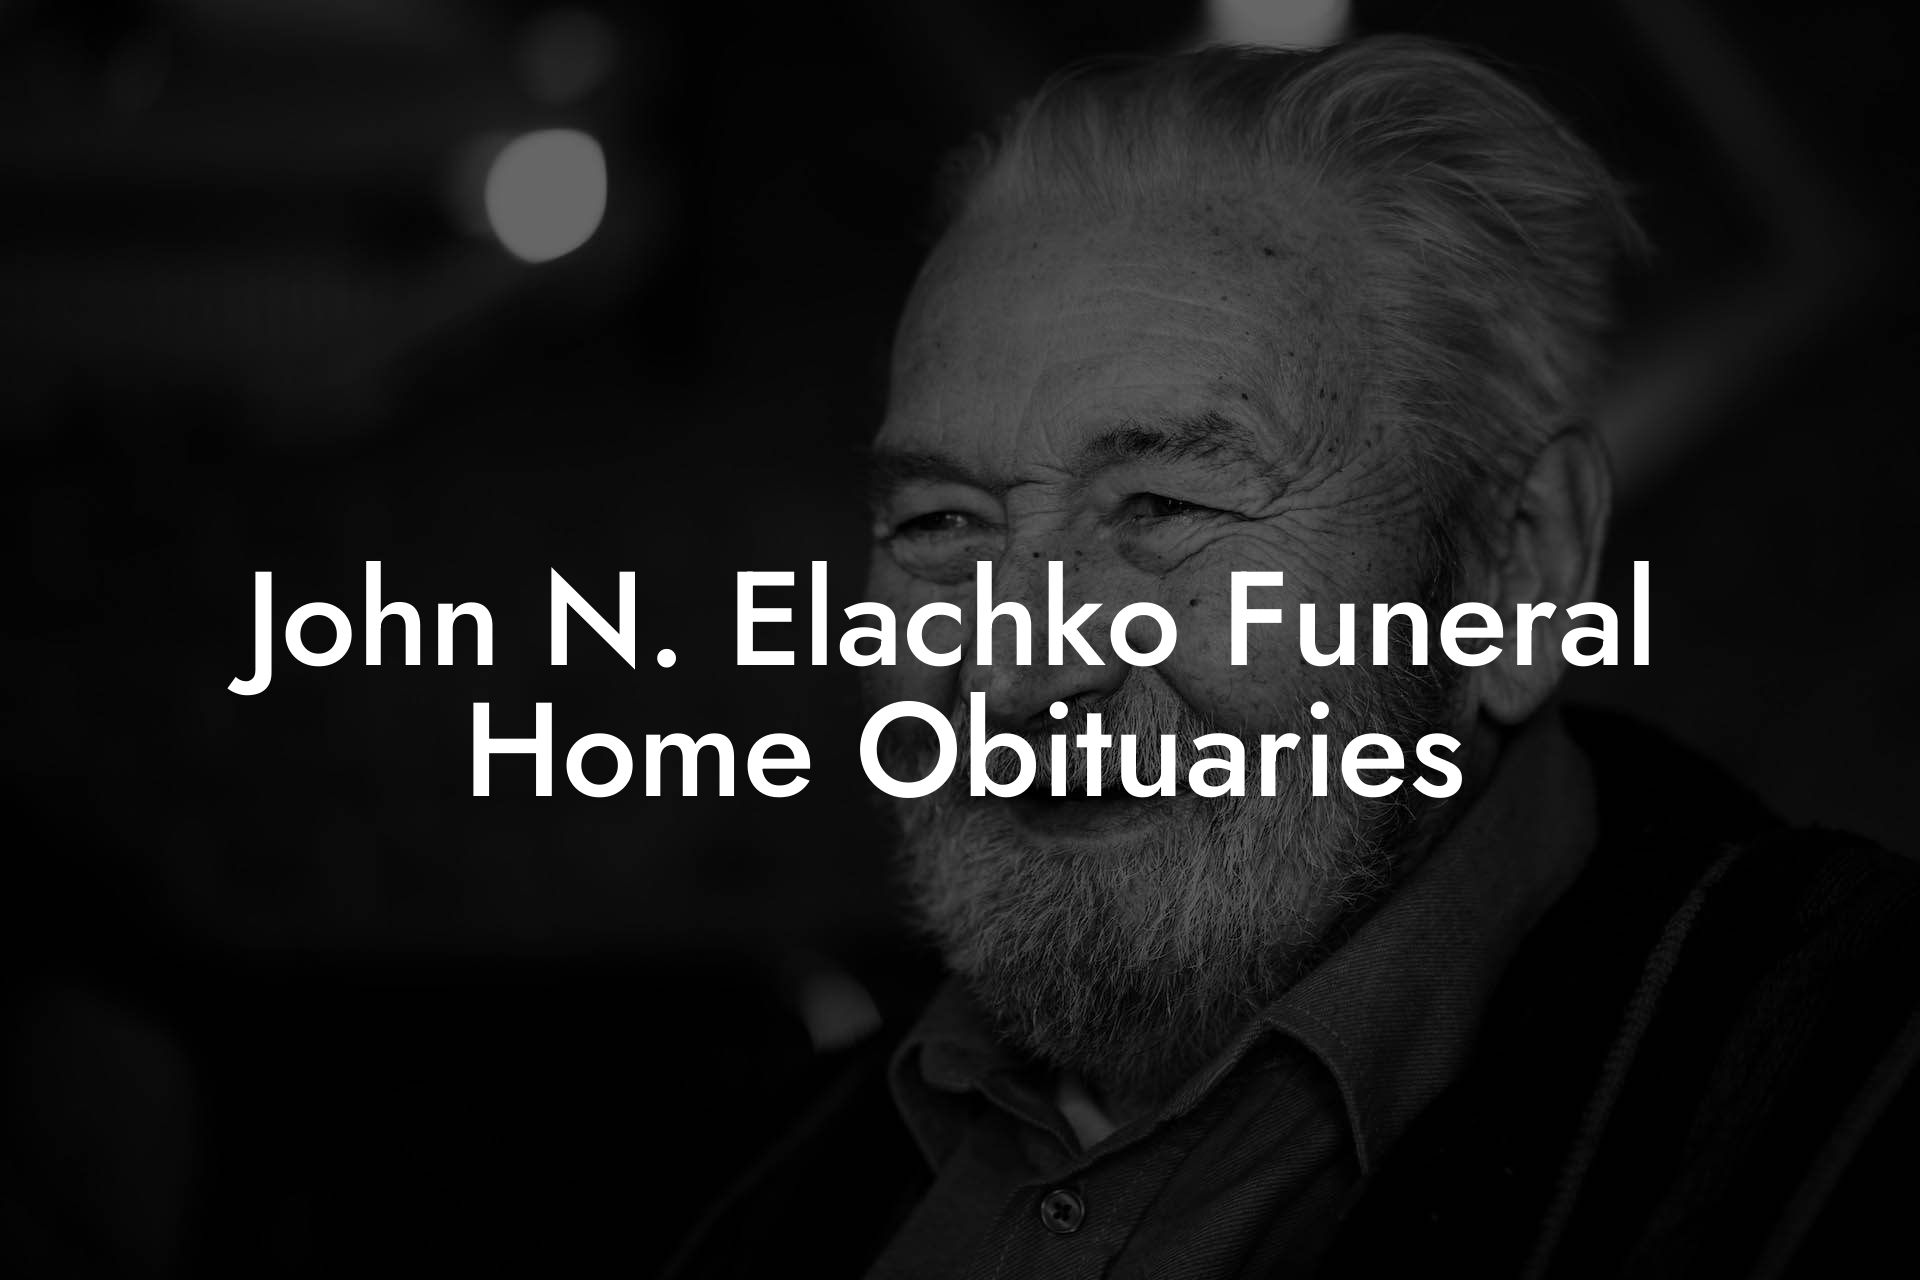 John N. Elachko Funeral Home Obituaries